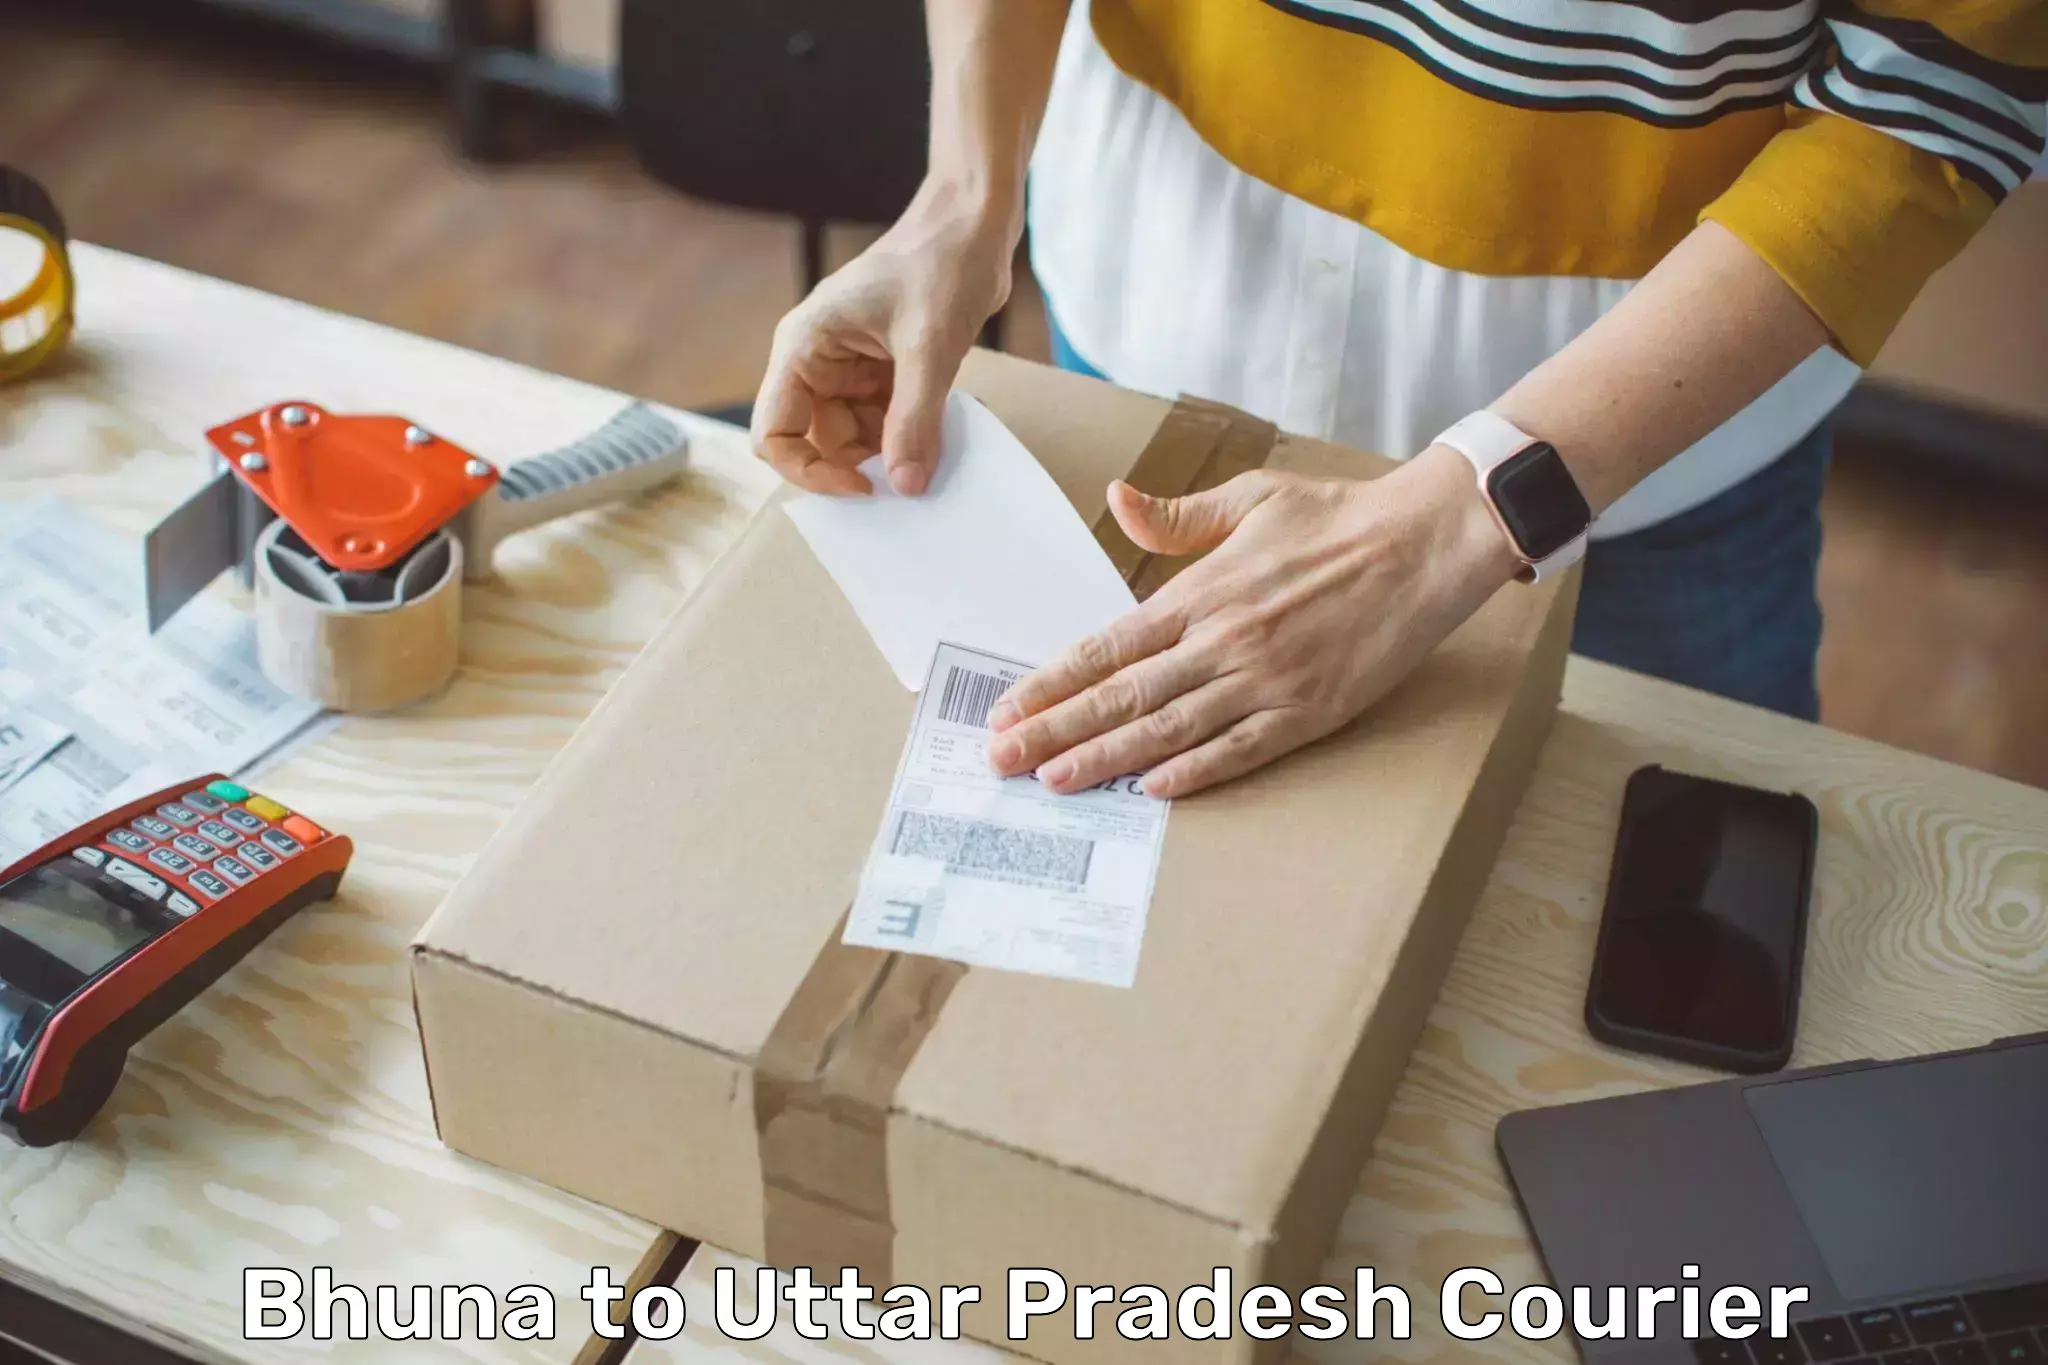 International parcel service Bhuna to Uttar Pradesh